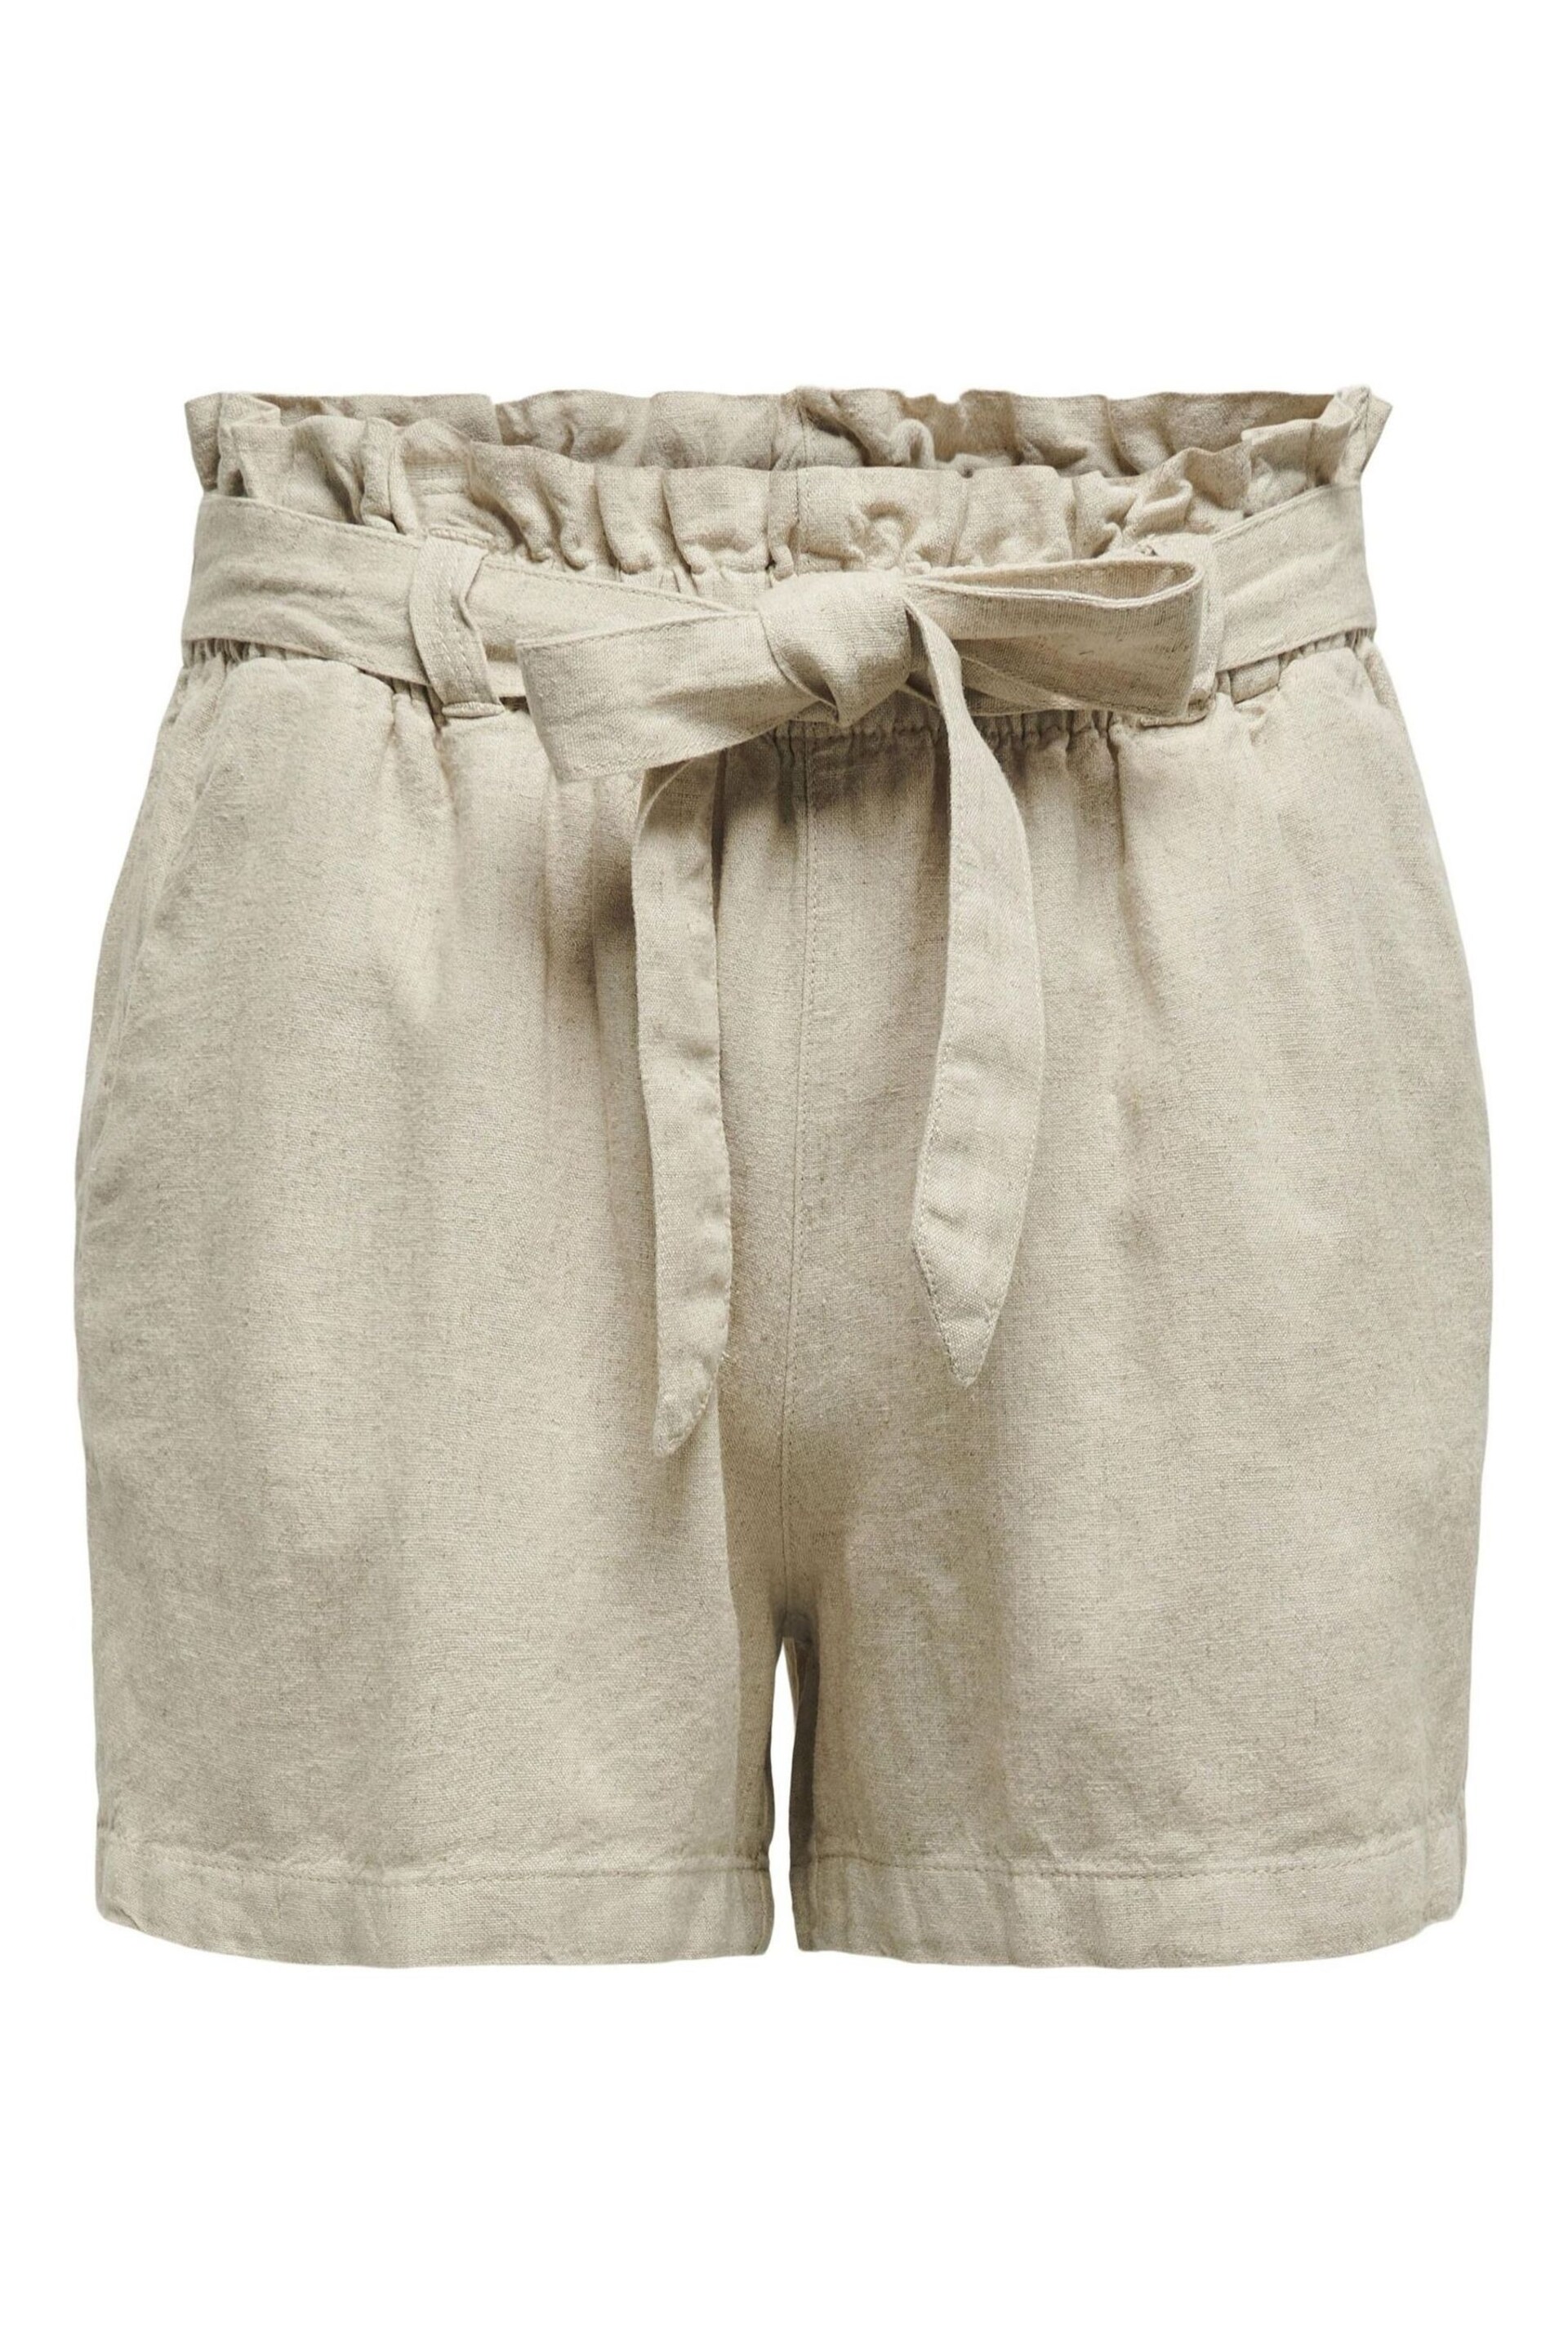 JDY Cream Linen Mix Tie Waist Shorts - Image 5 of 6